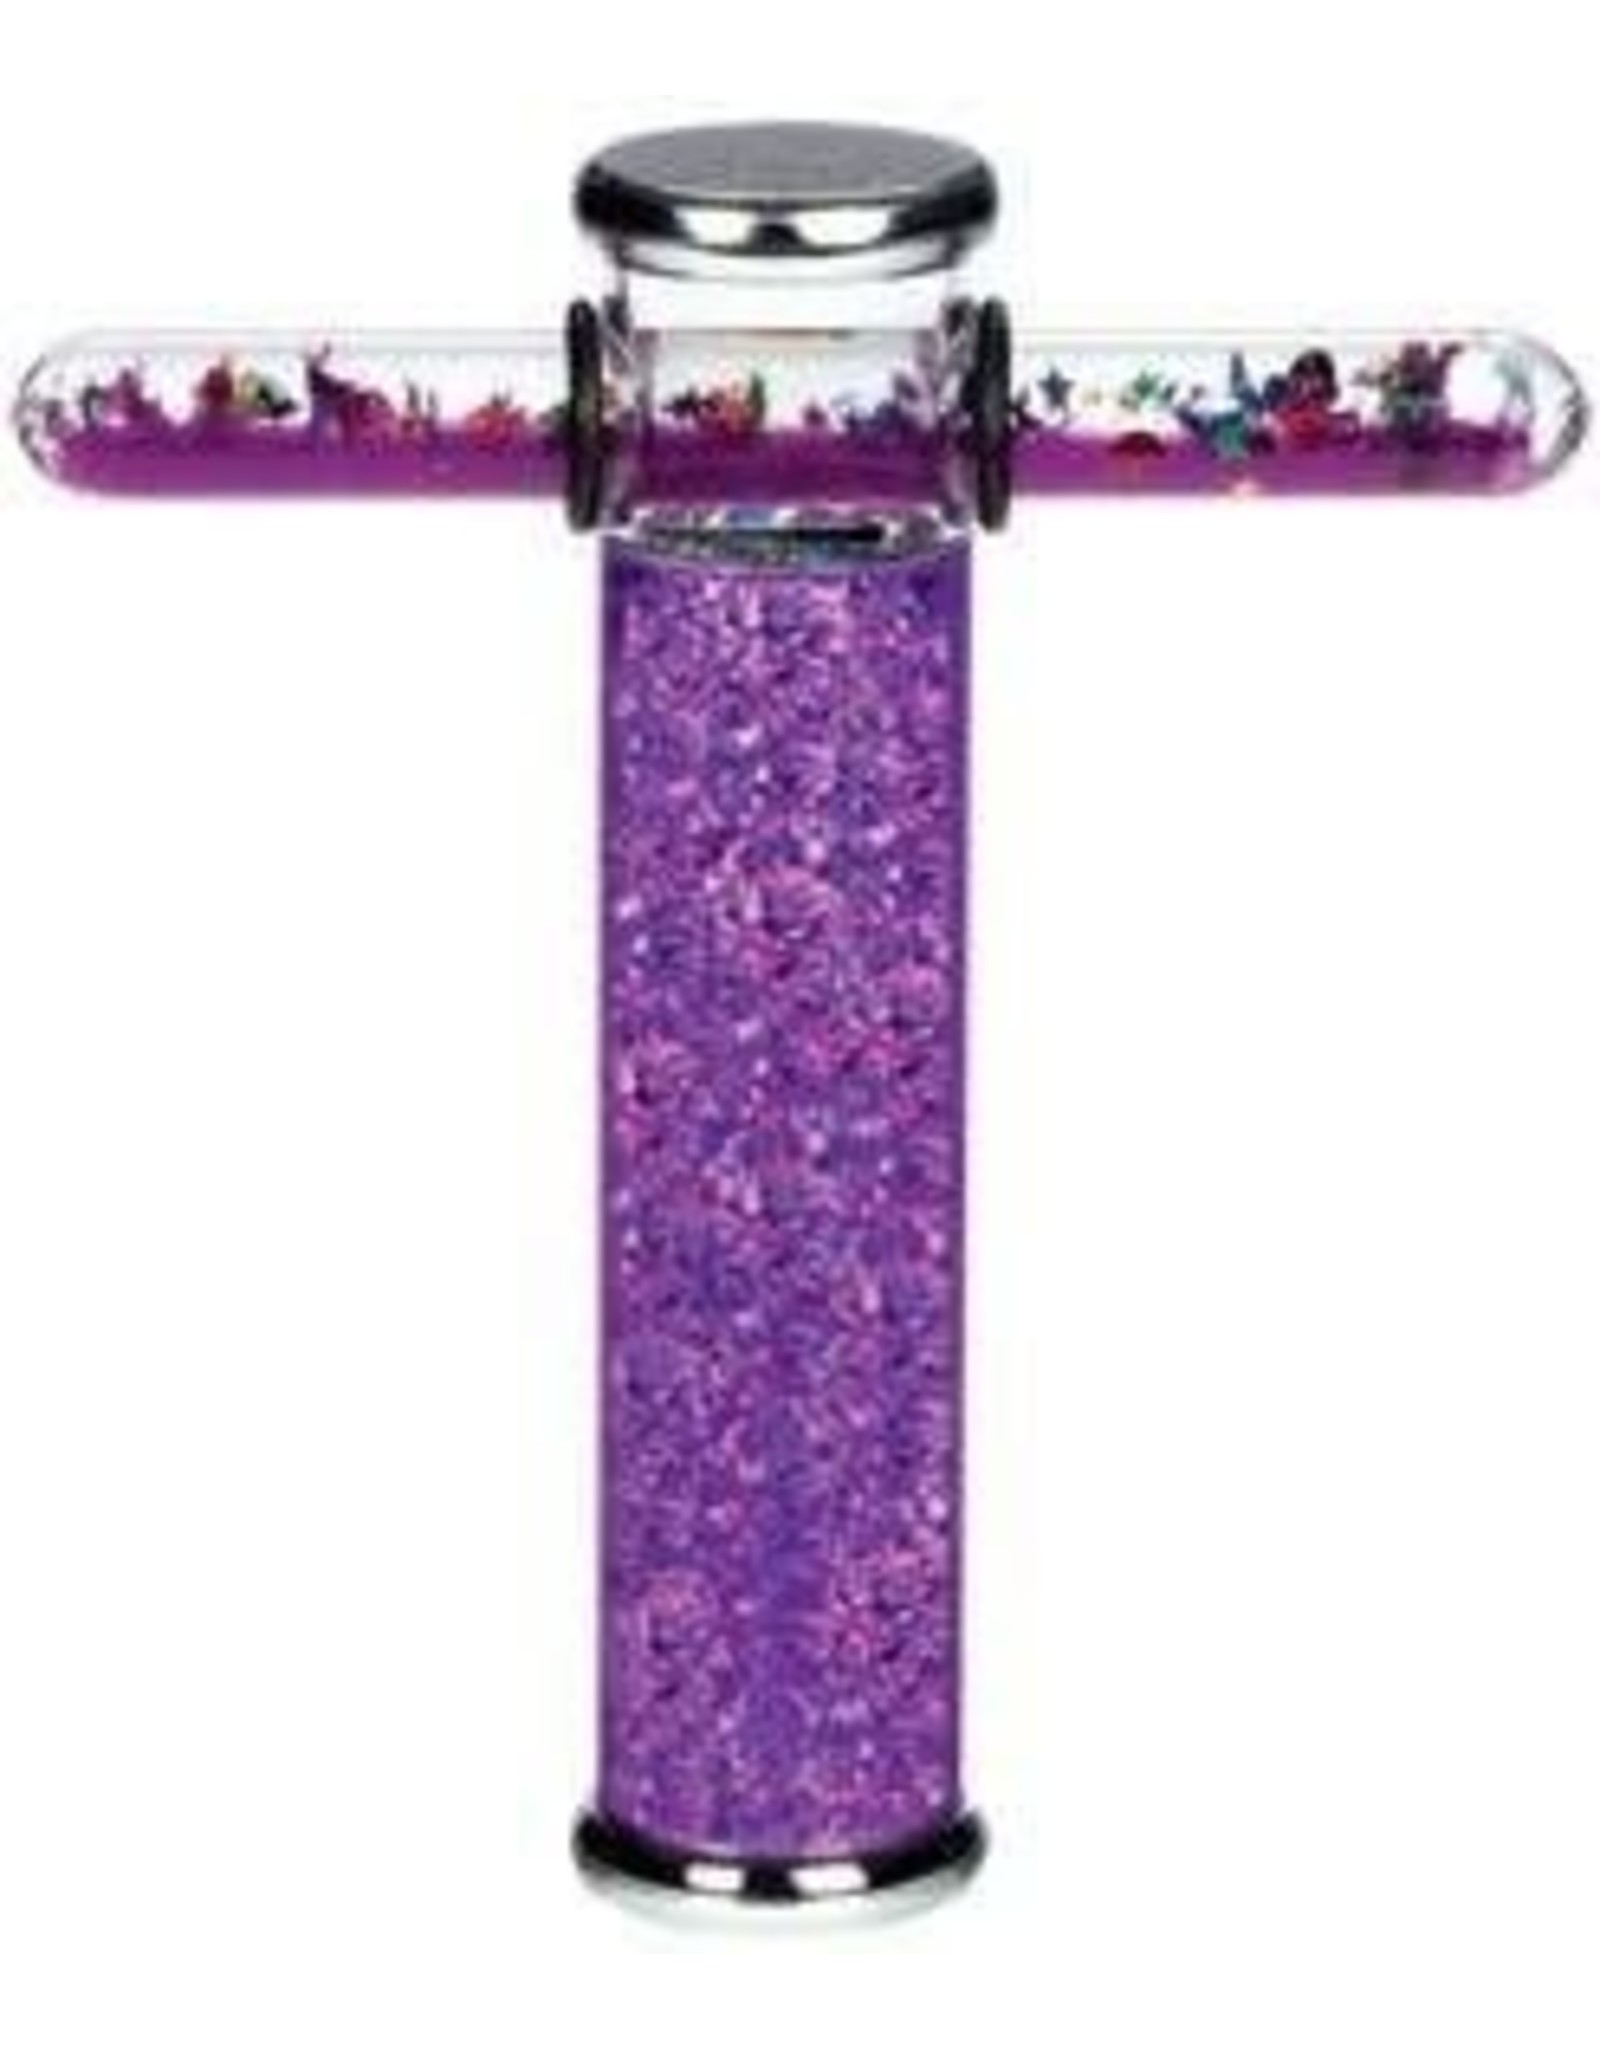 Toysmith Glitter Wand Kldscope-asst. colors